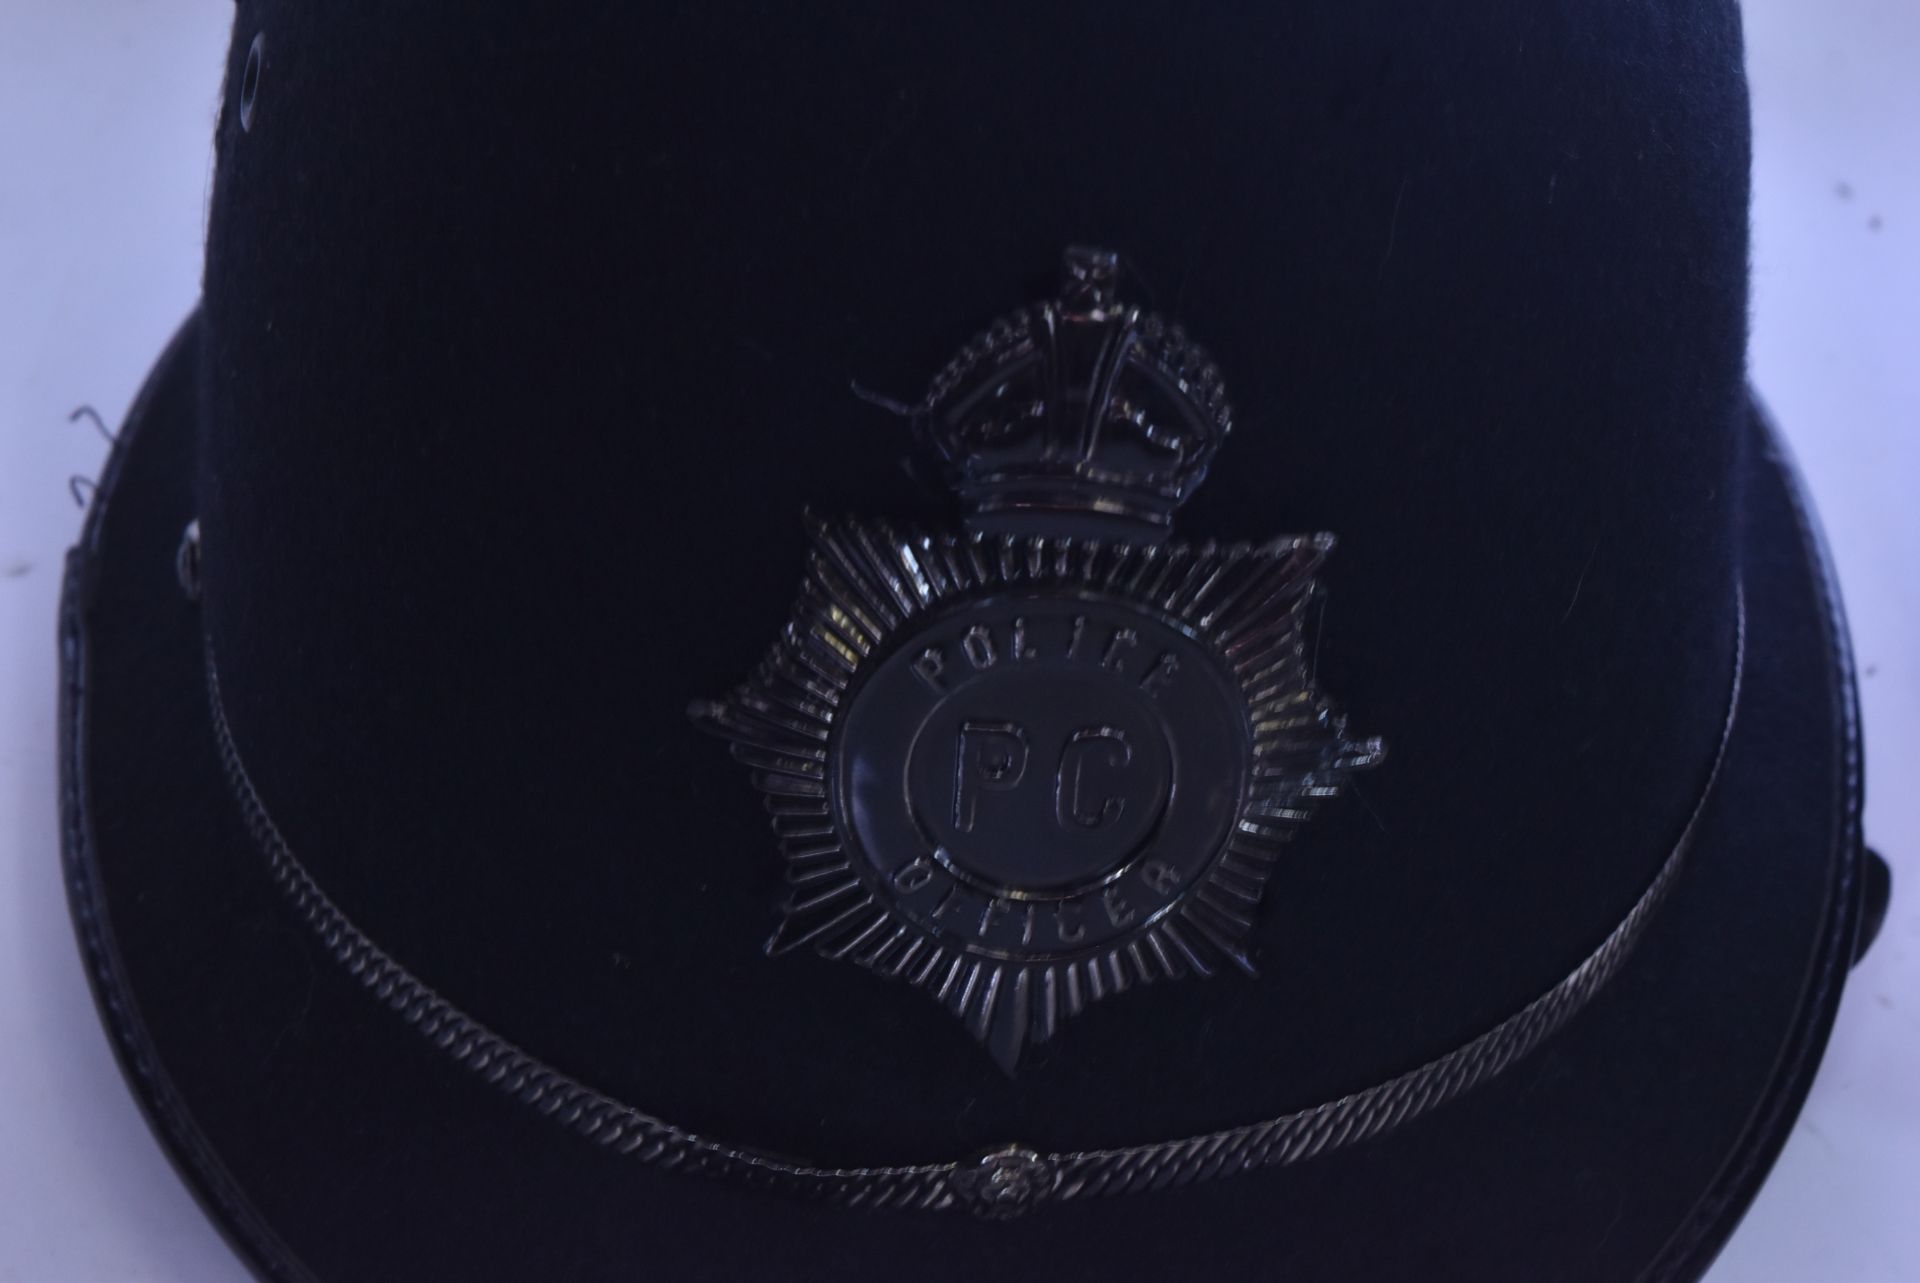 THREE BRITISH POLICE CUSTODIAN HELMETS - Image 2 of 4